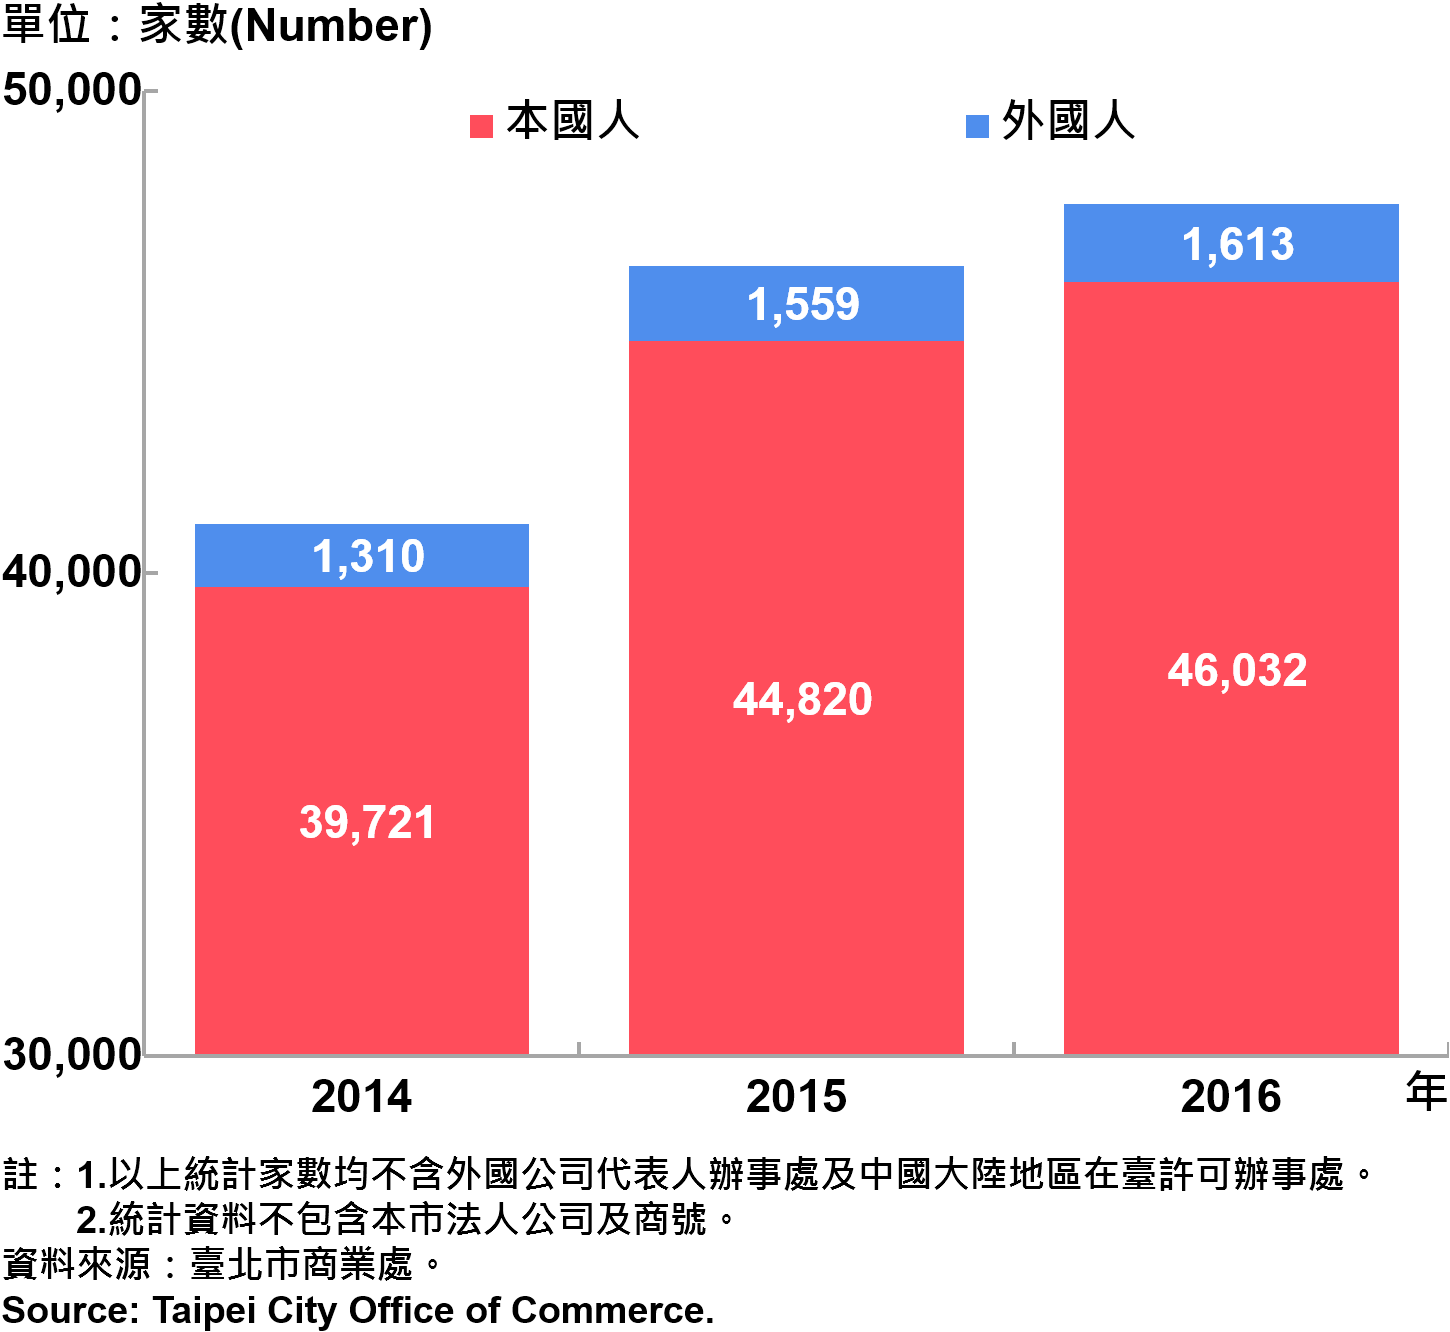 圖20、臺北市公司青創負責人為本國人與外國人分布情形—依現存家數—2016 Responsible Person of Newly Registered Companies In Taipei by Nationality - Number of Current —2016